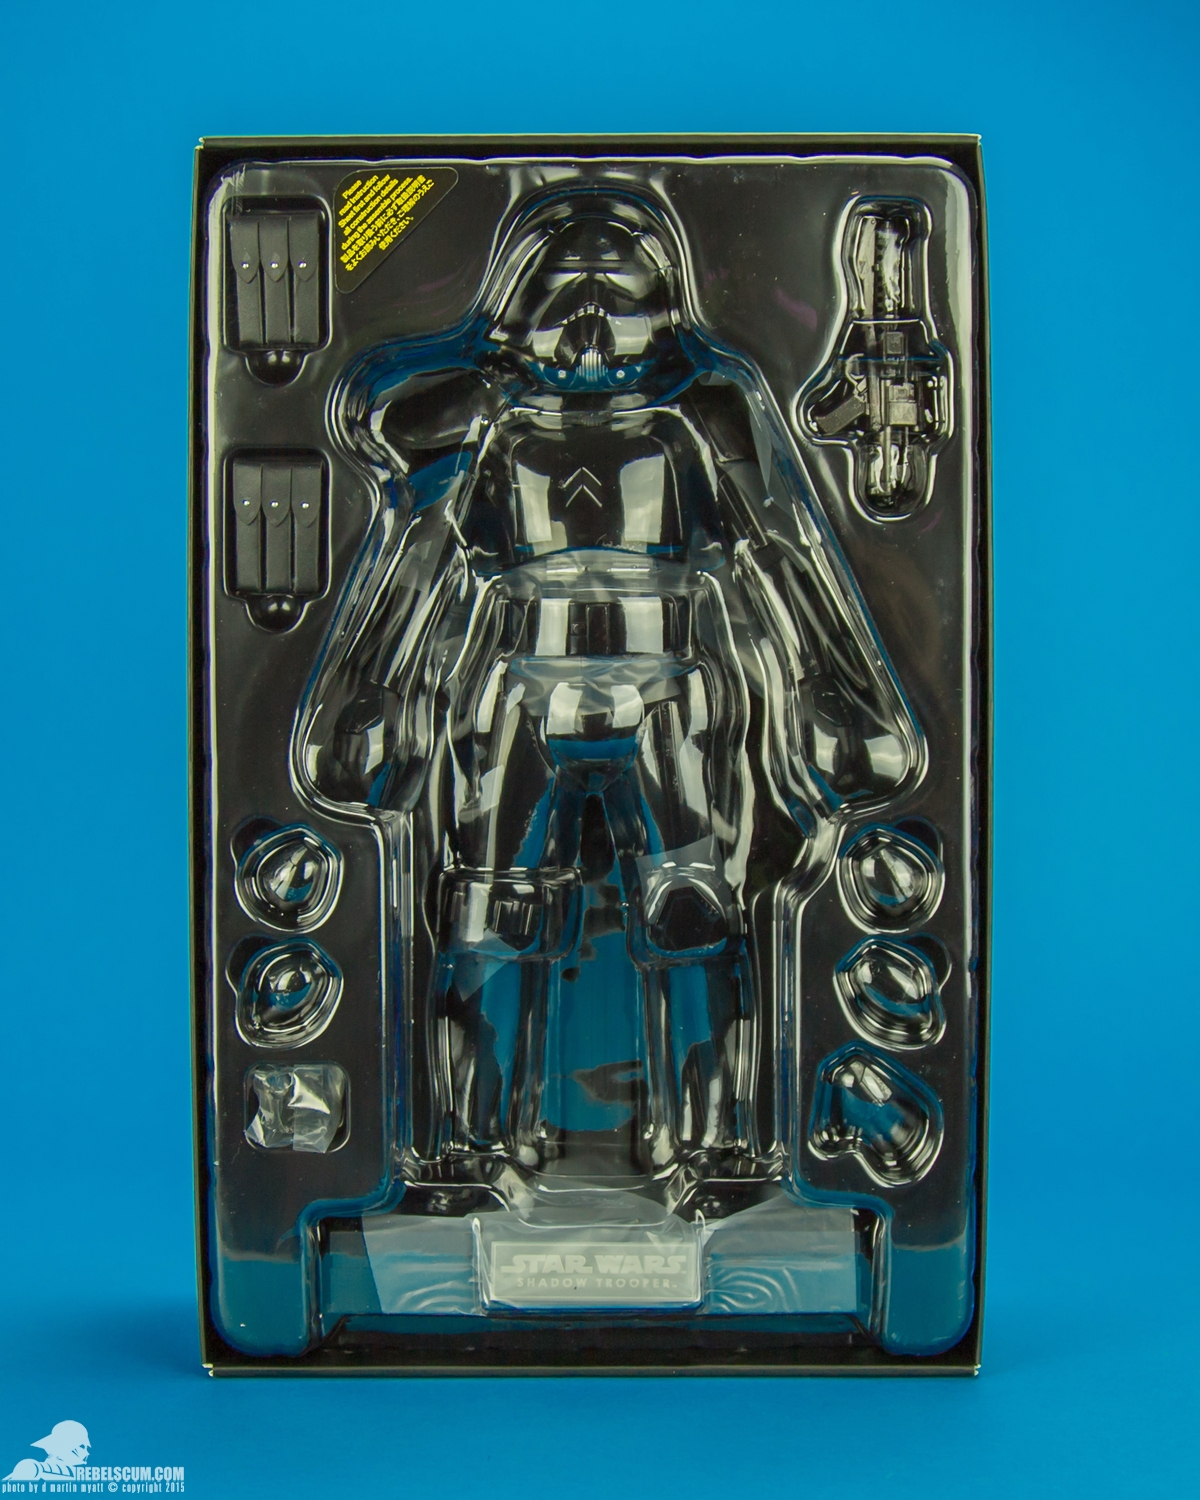 MMS271-Shadow-trooper-Hot-Toys-Star-Wars-figure-026.jpg